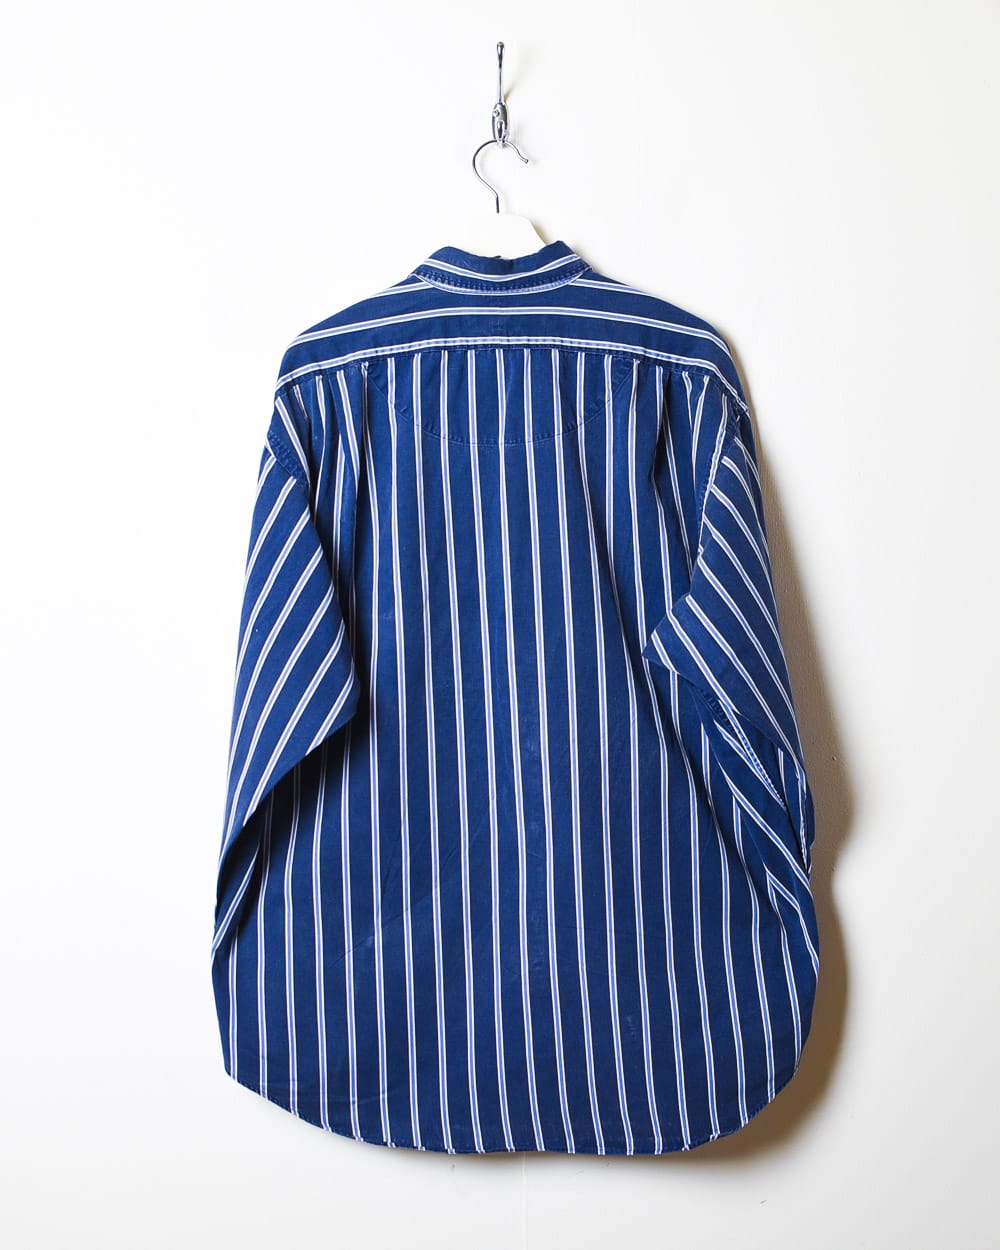 Navy Polo Ralph Lauren Striped Shirt - X-Large